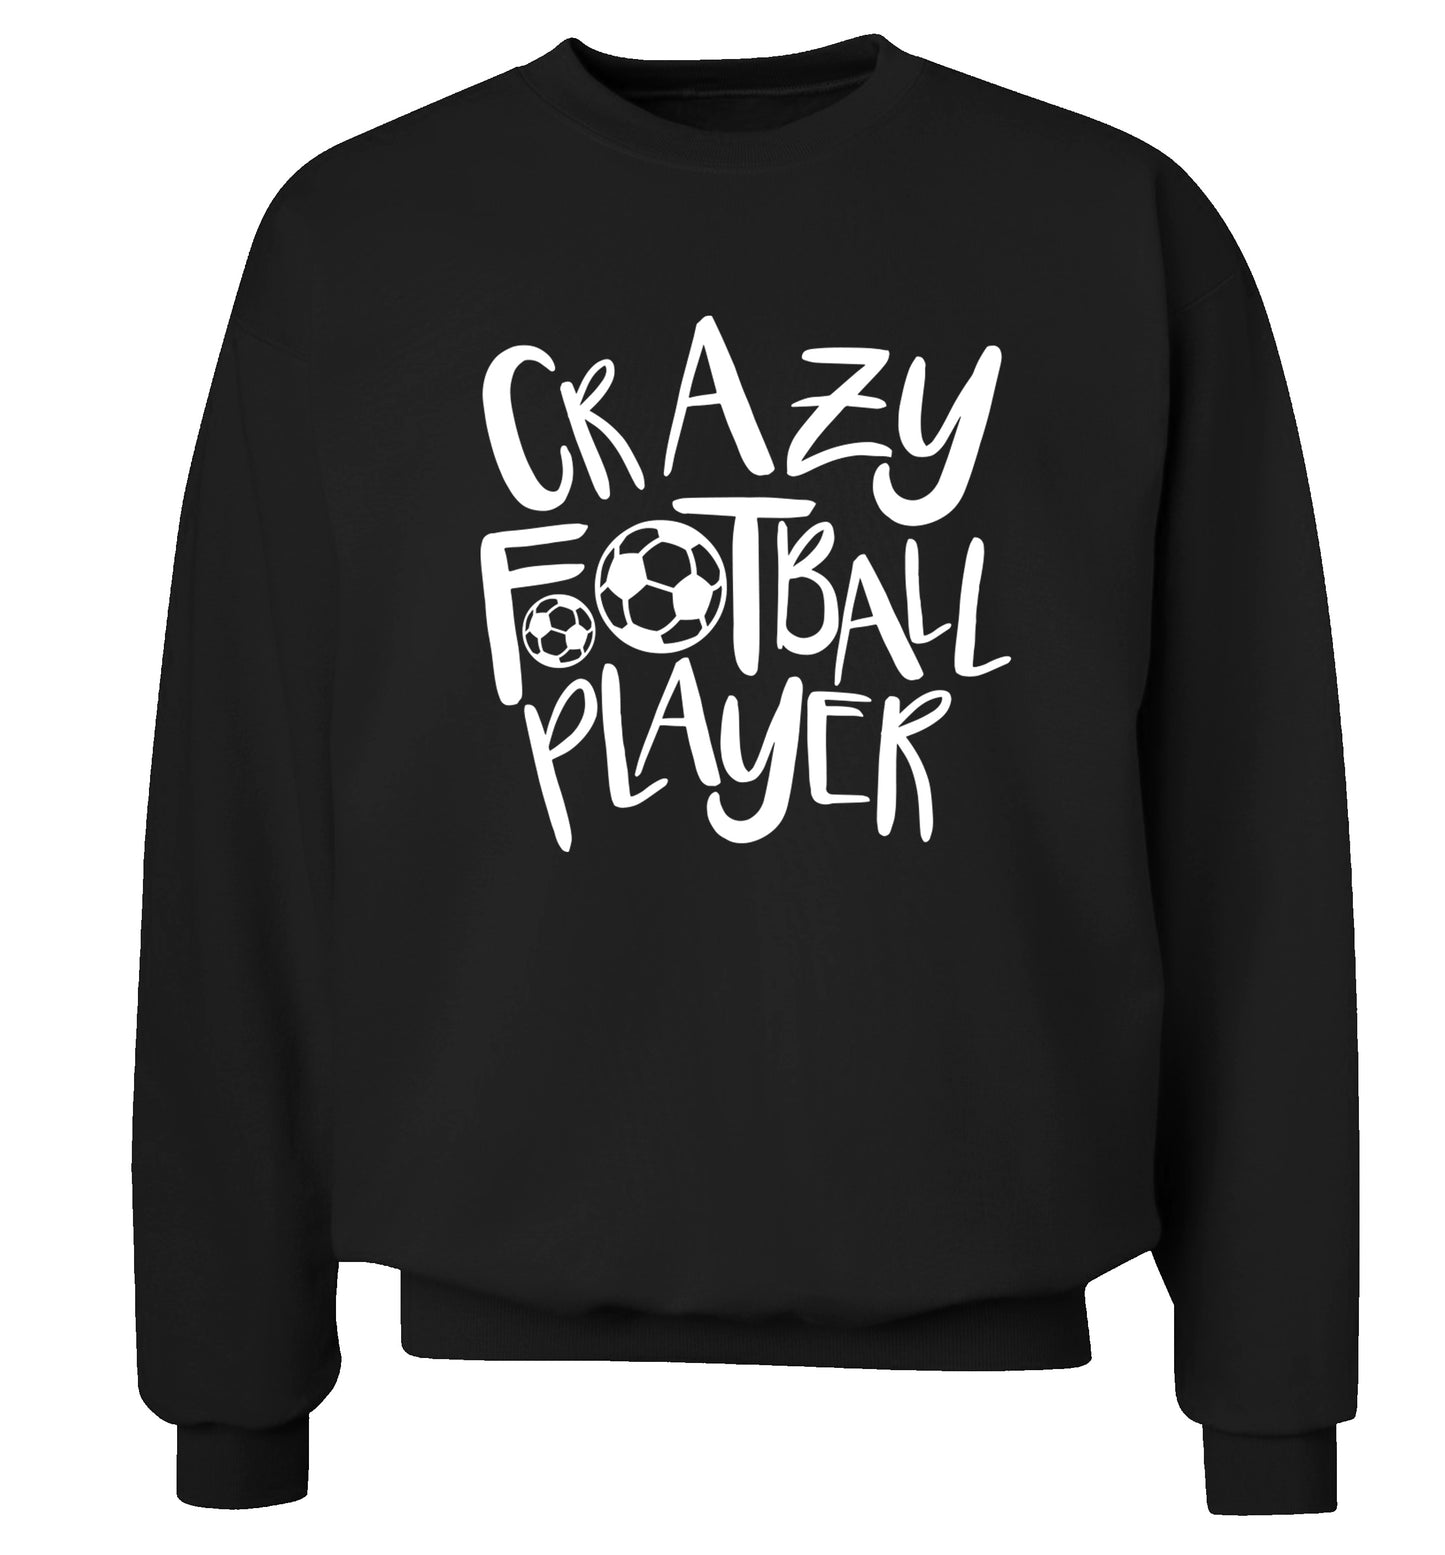 Crazy football player Adult's unisexblack Sweater 2XL